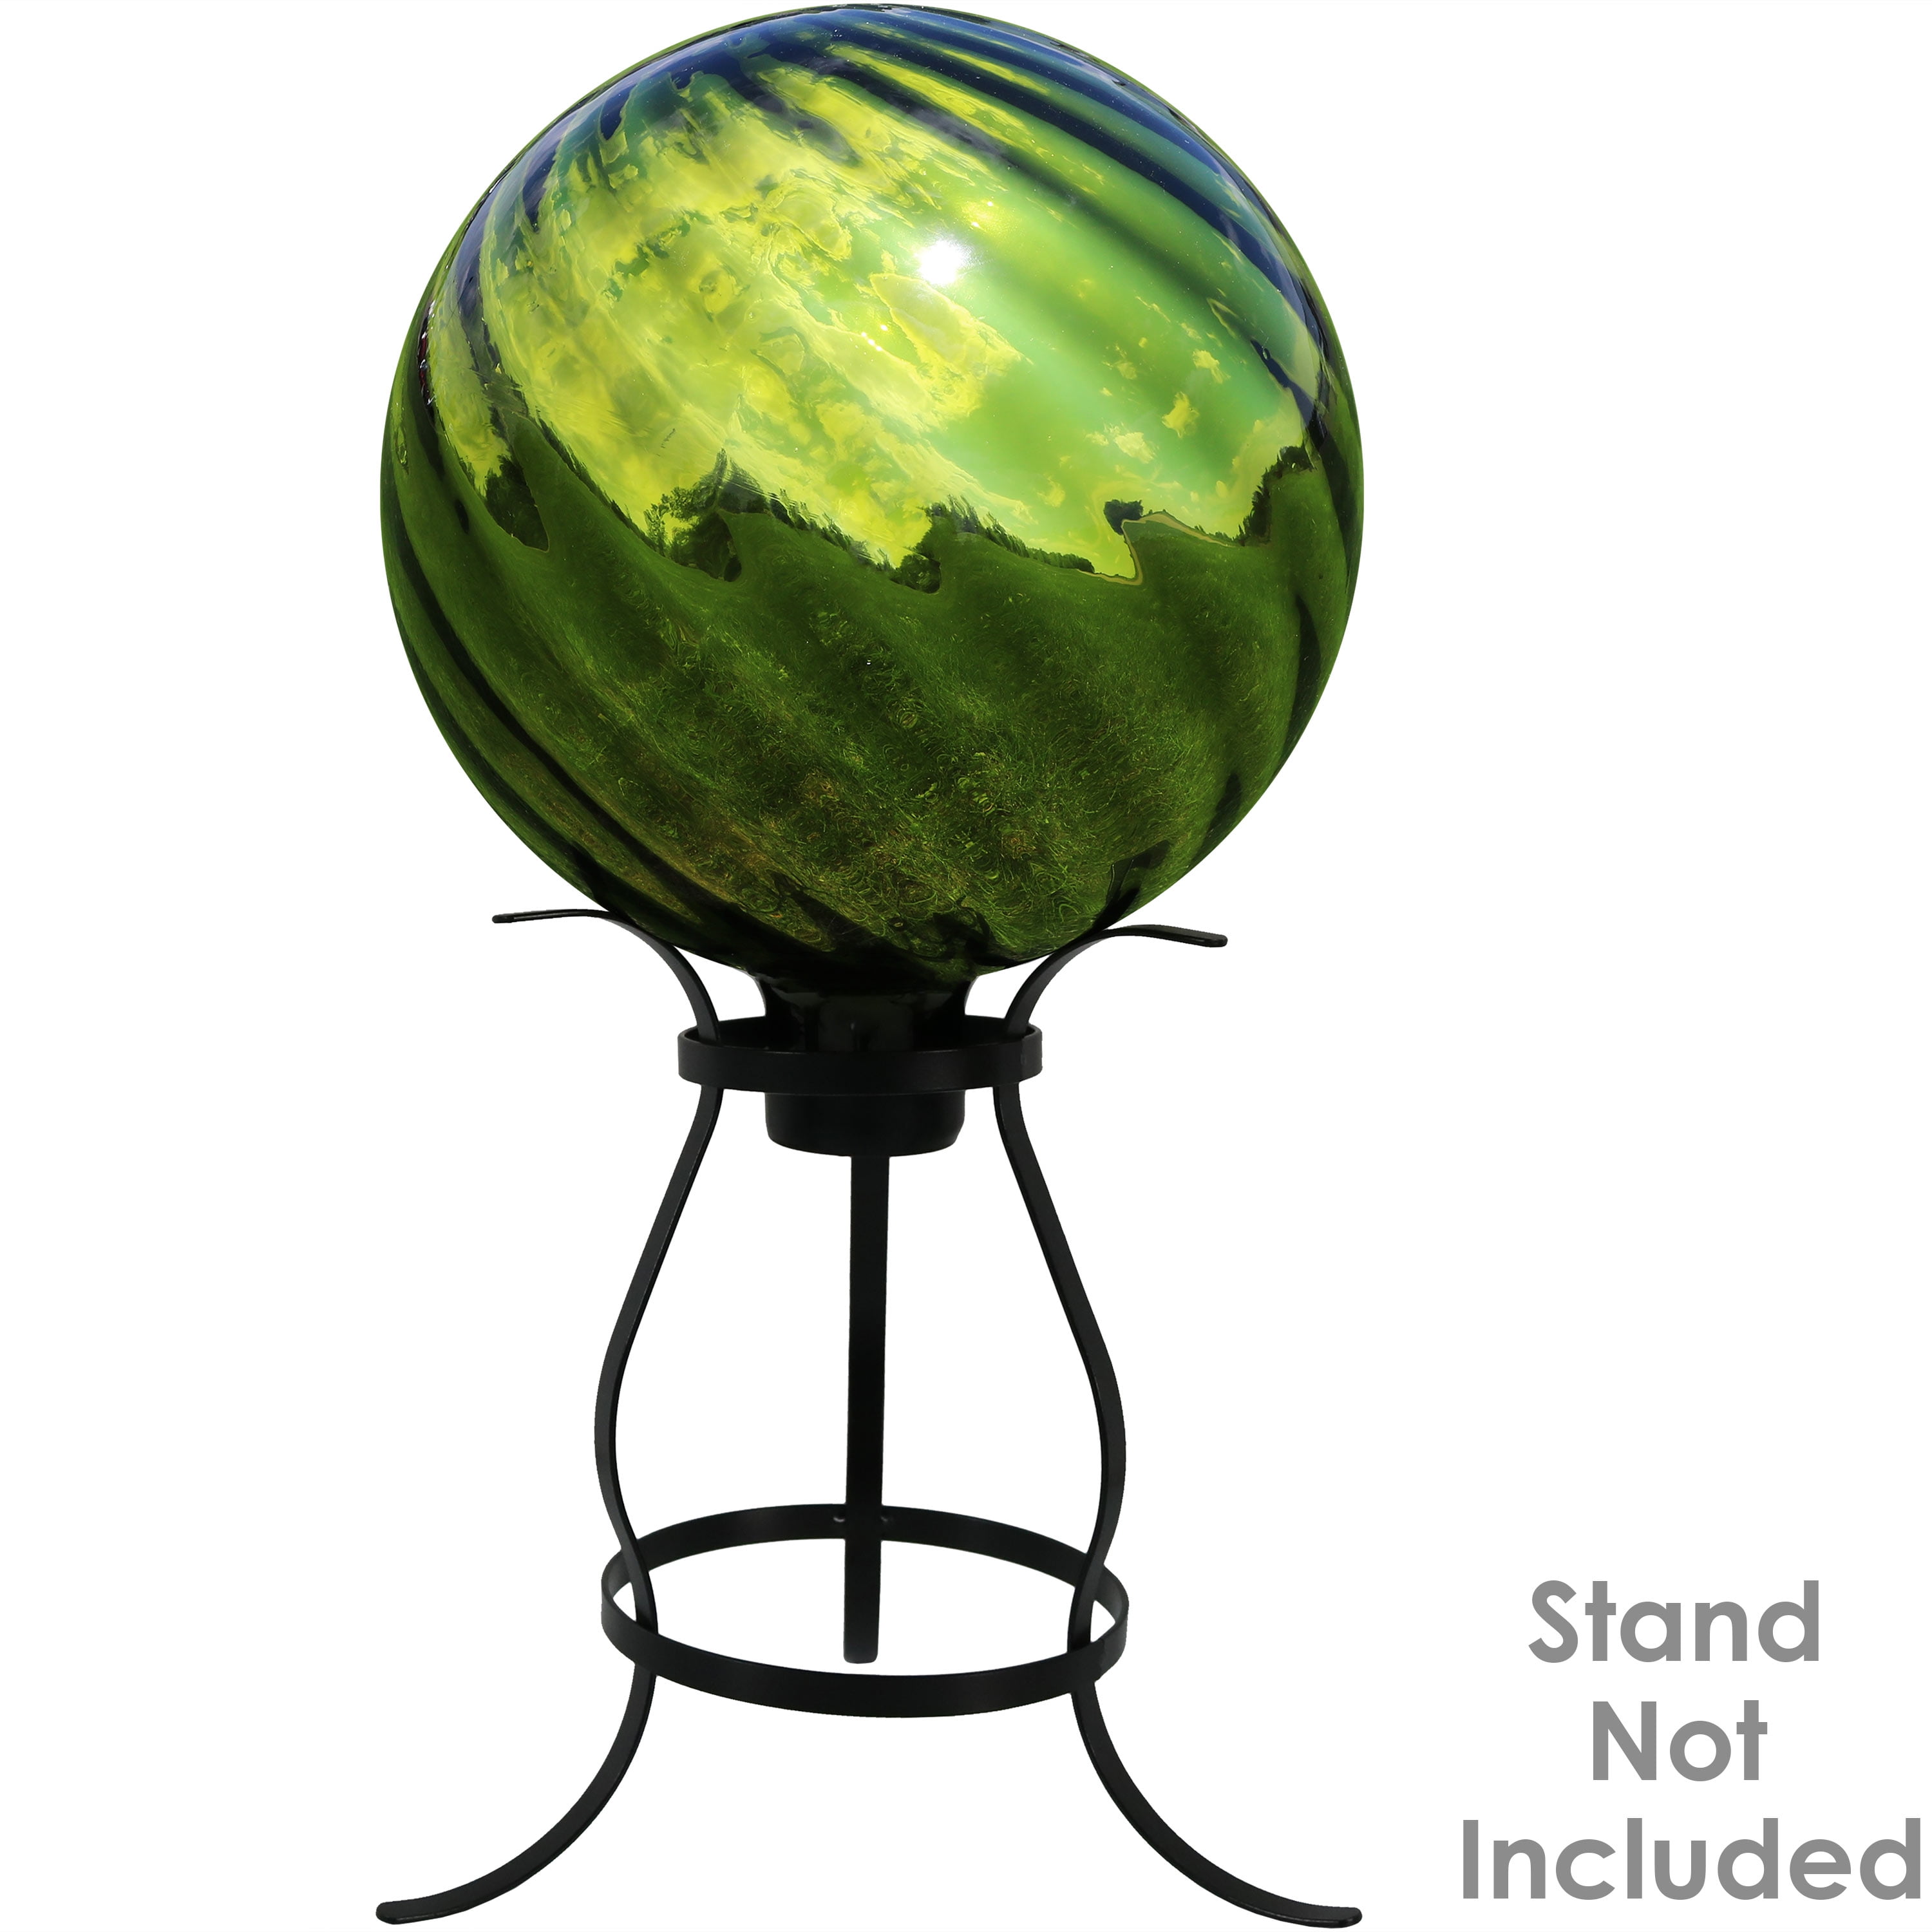 10" Sunnydaze Green Rippled Mirrored Surface Glass Outdoor Gazing Globe Ball 